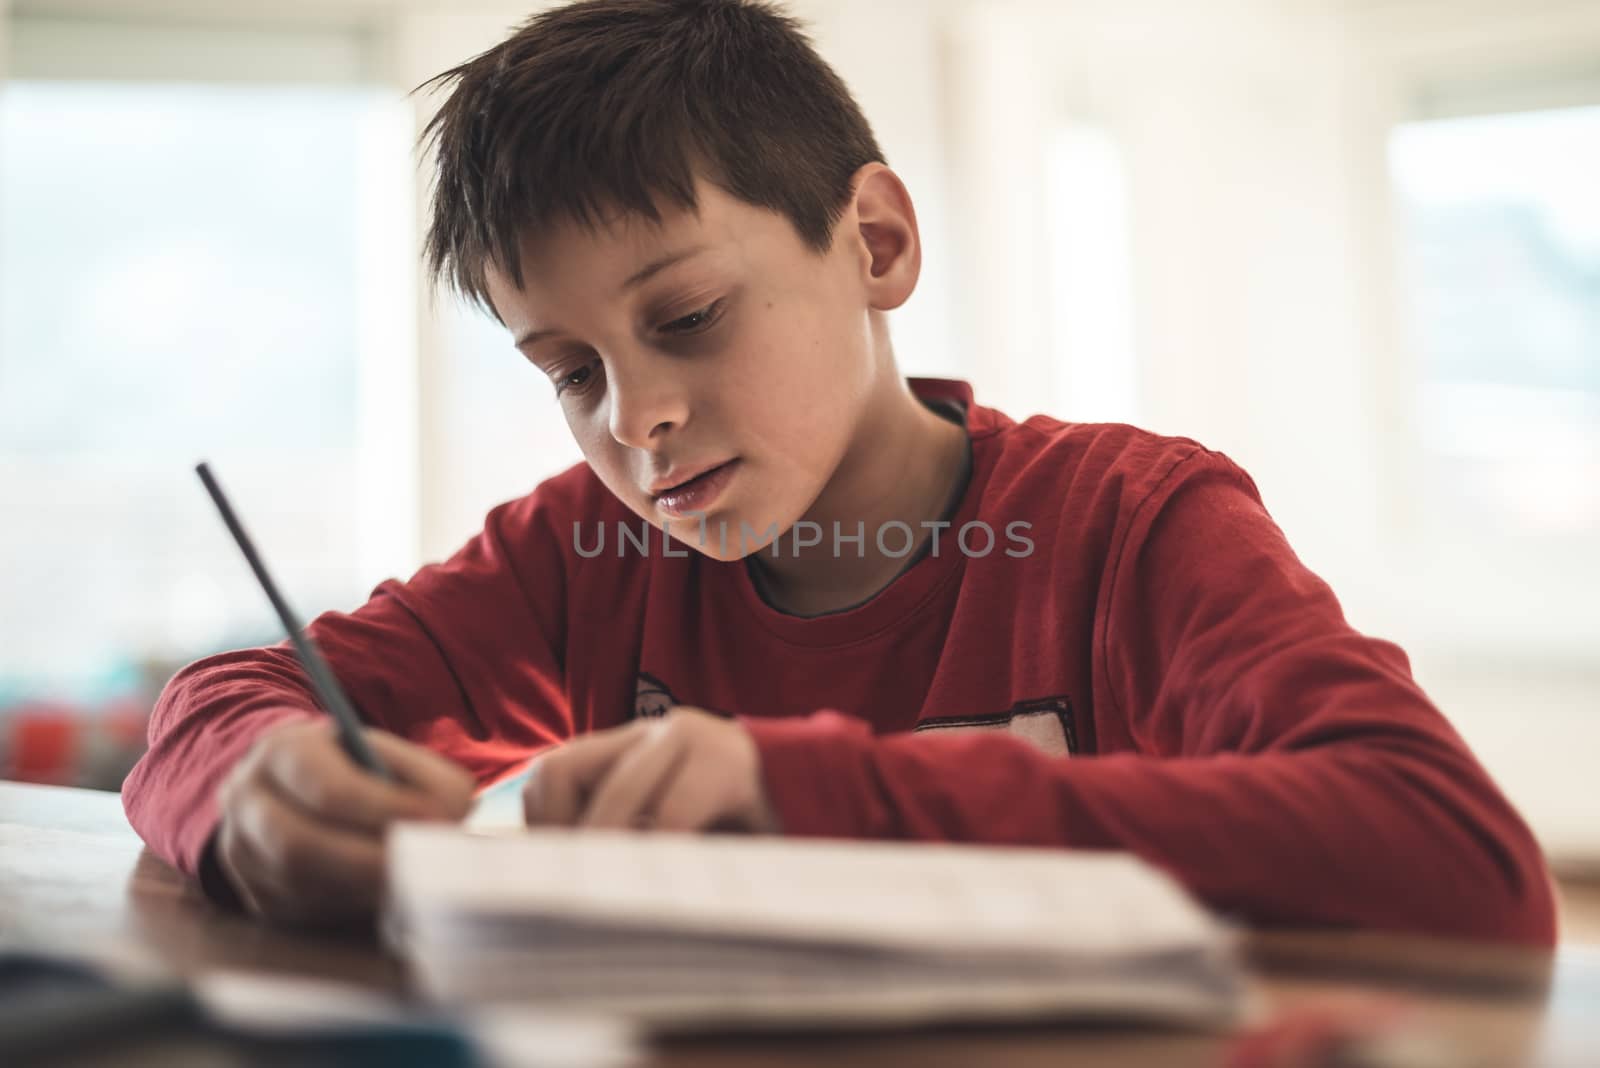 School boy doing homework by gorgev